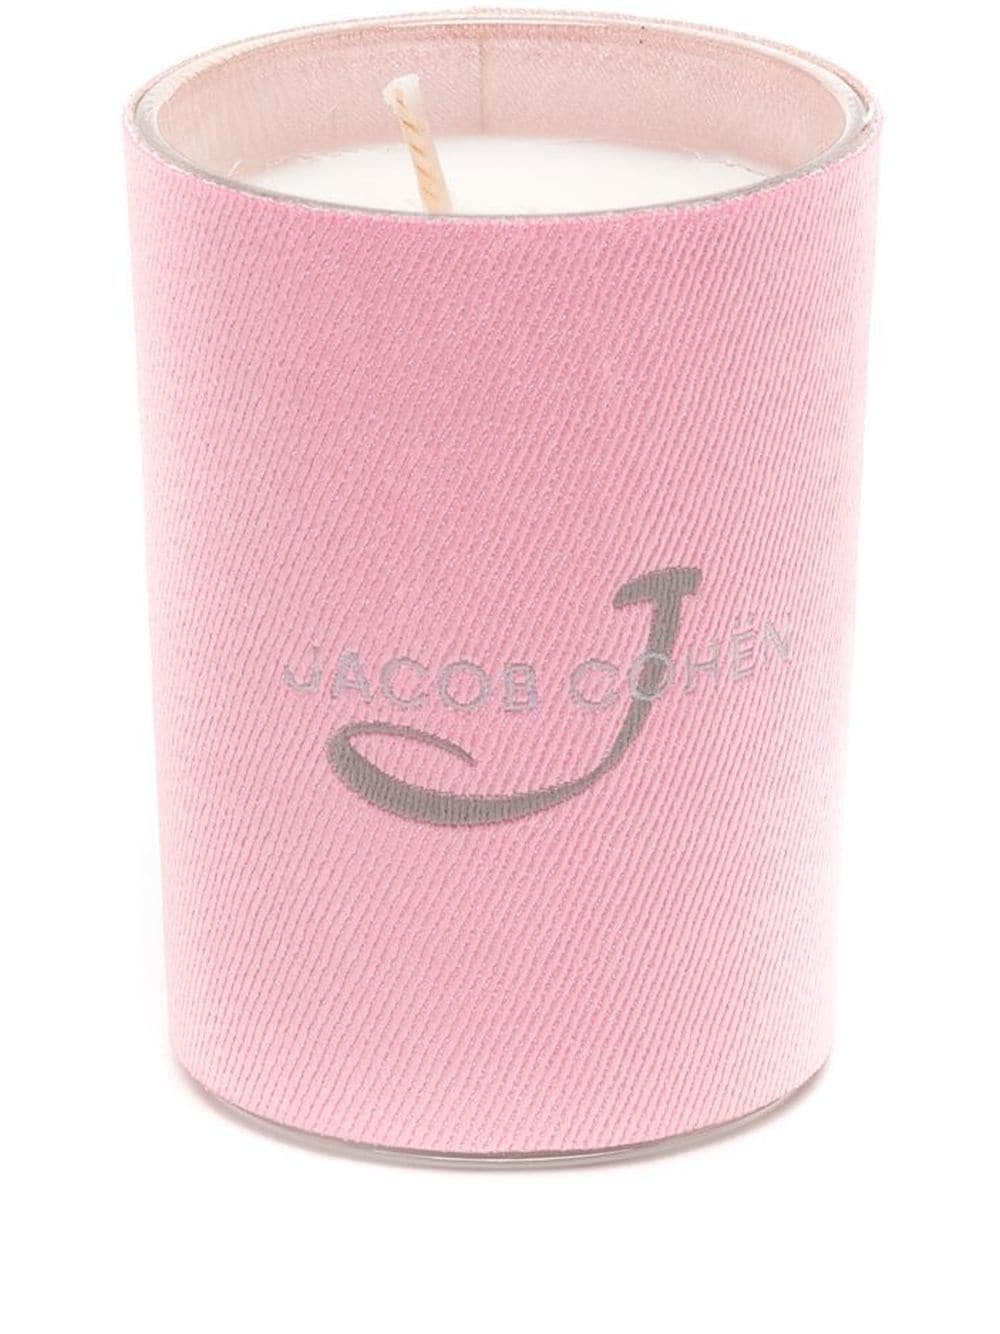 Jacob Cohën logo embroidered candle - Pink von Jacob Cohën